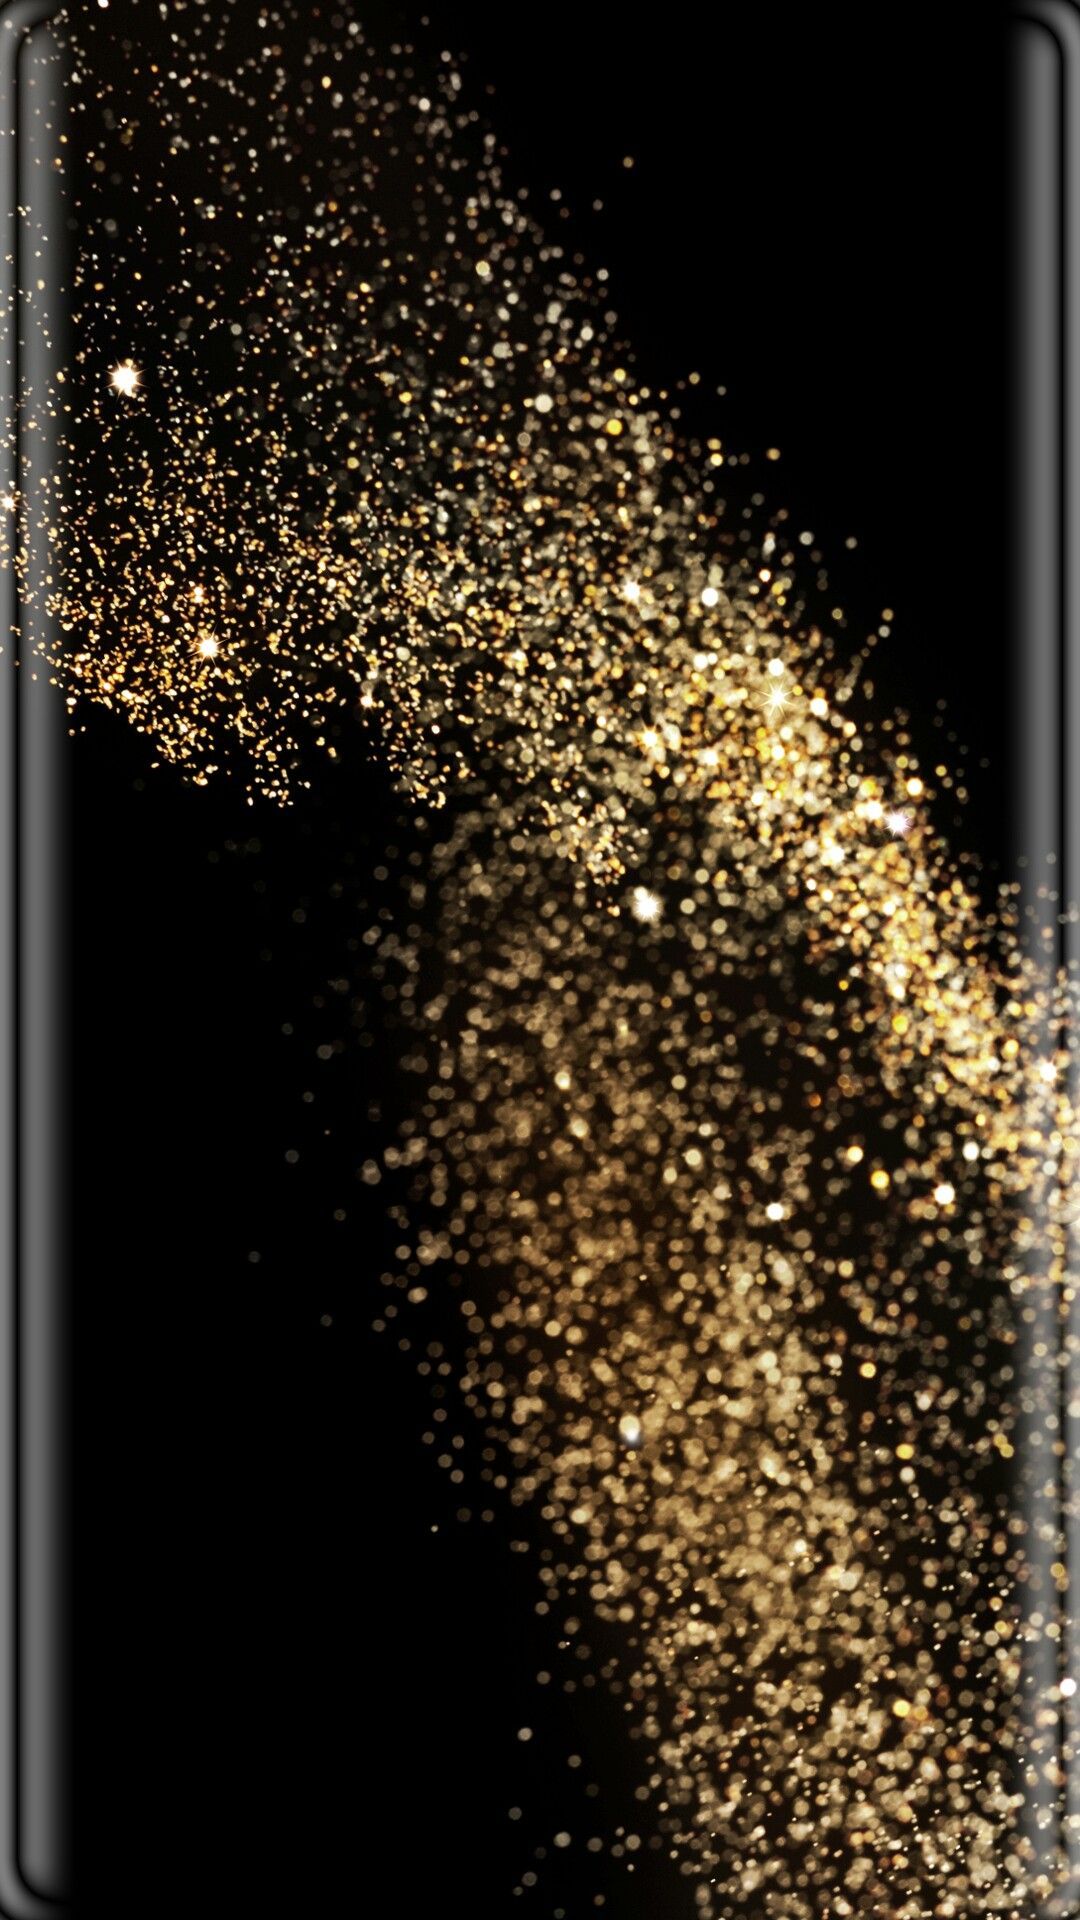 Black with Gold Dust Wallpaper. Gold .com.au